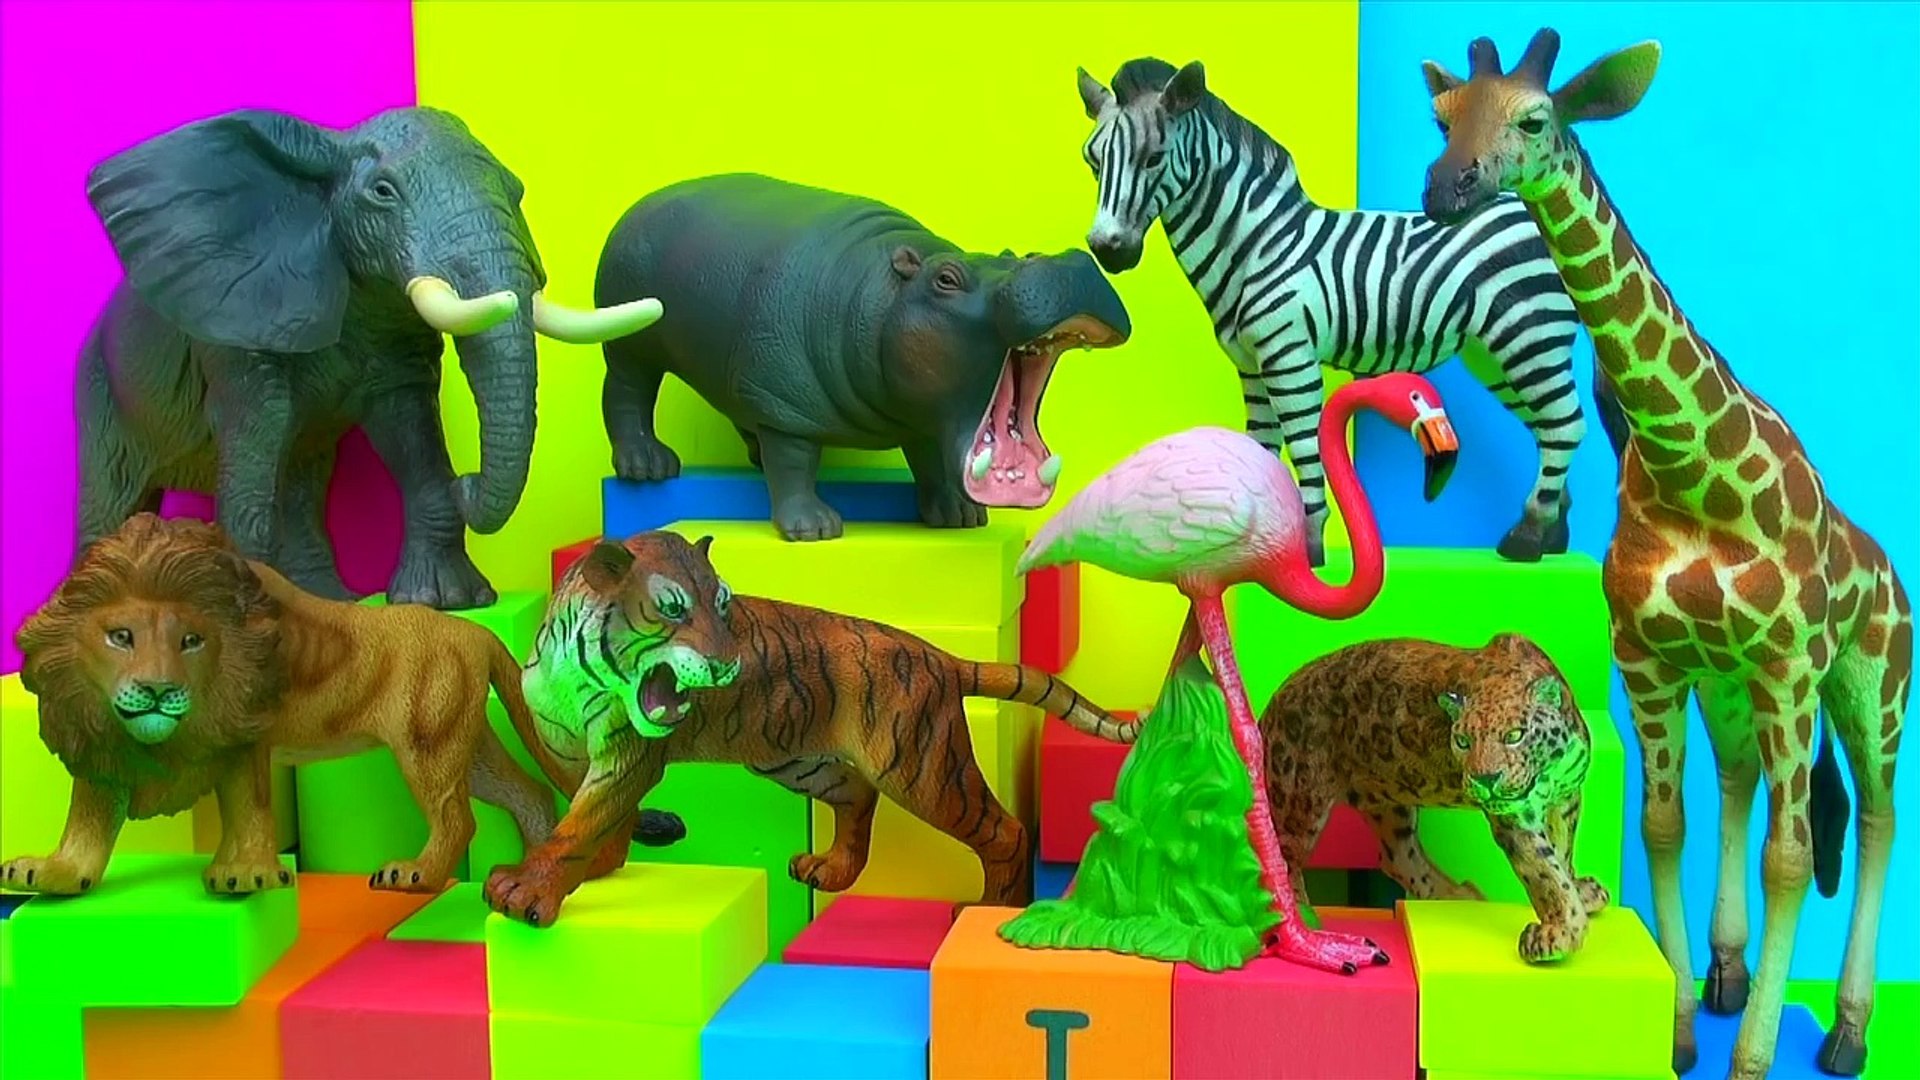 Happy Cute Zoo Animals Lion Tiger Zebra Elephant Hippopotamus Toy Review  FUN Ending - Dailymotion Video